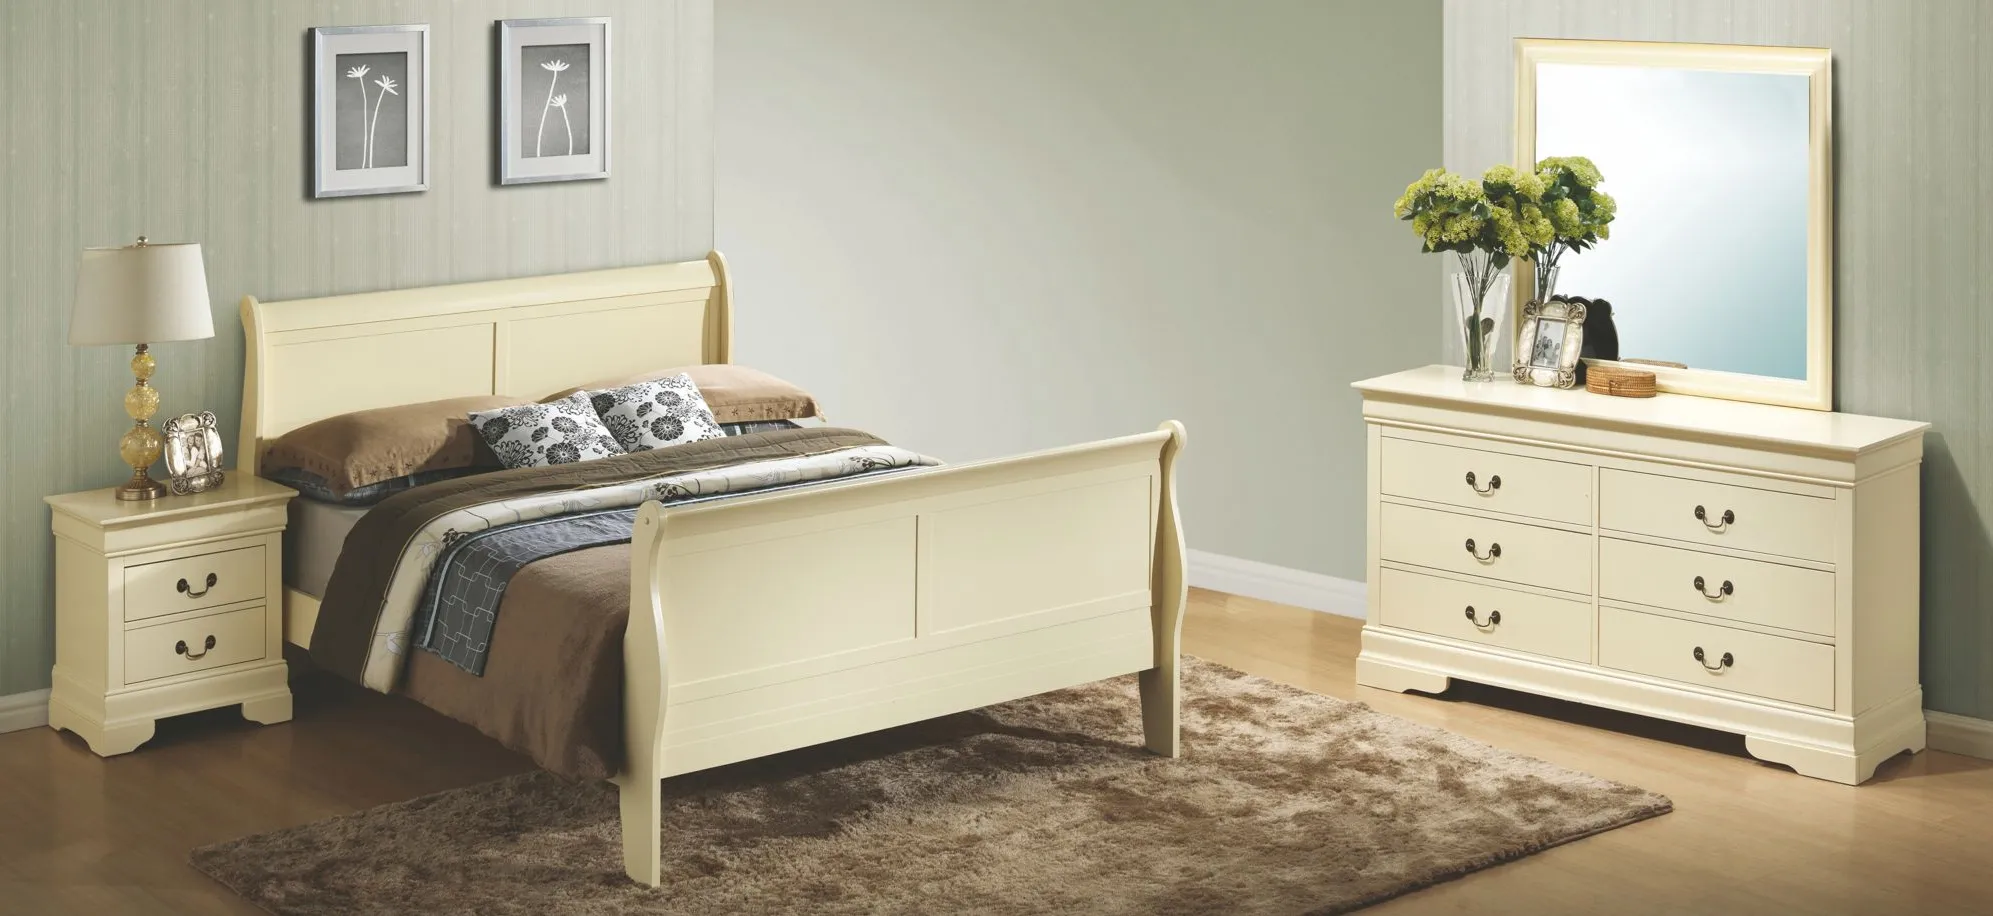 Rossie 4-pc. Bedroom Set in Beige by Glory Furniture